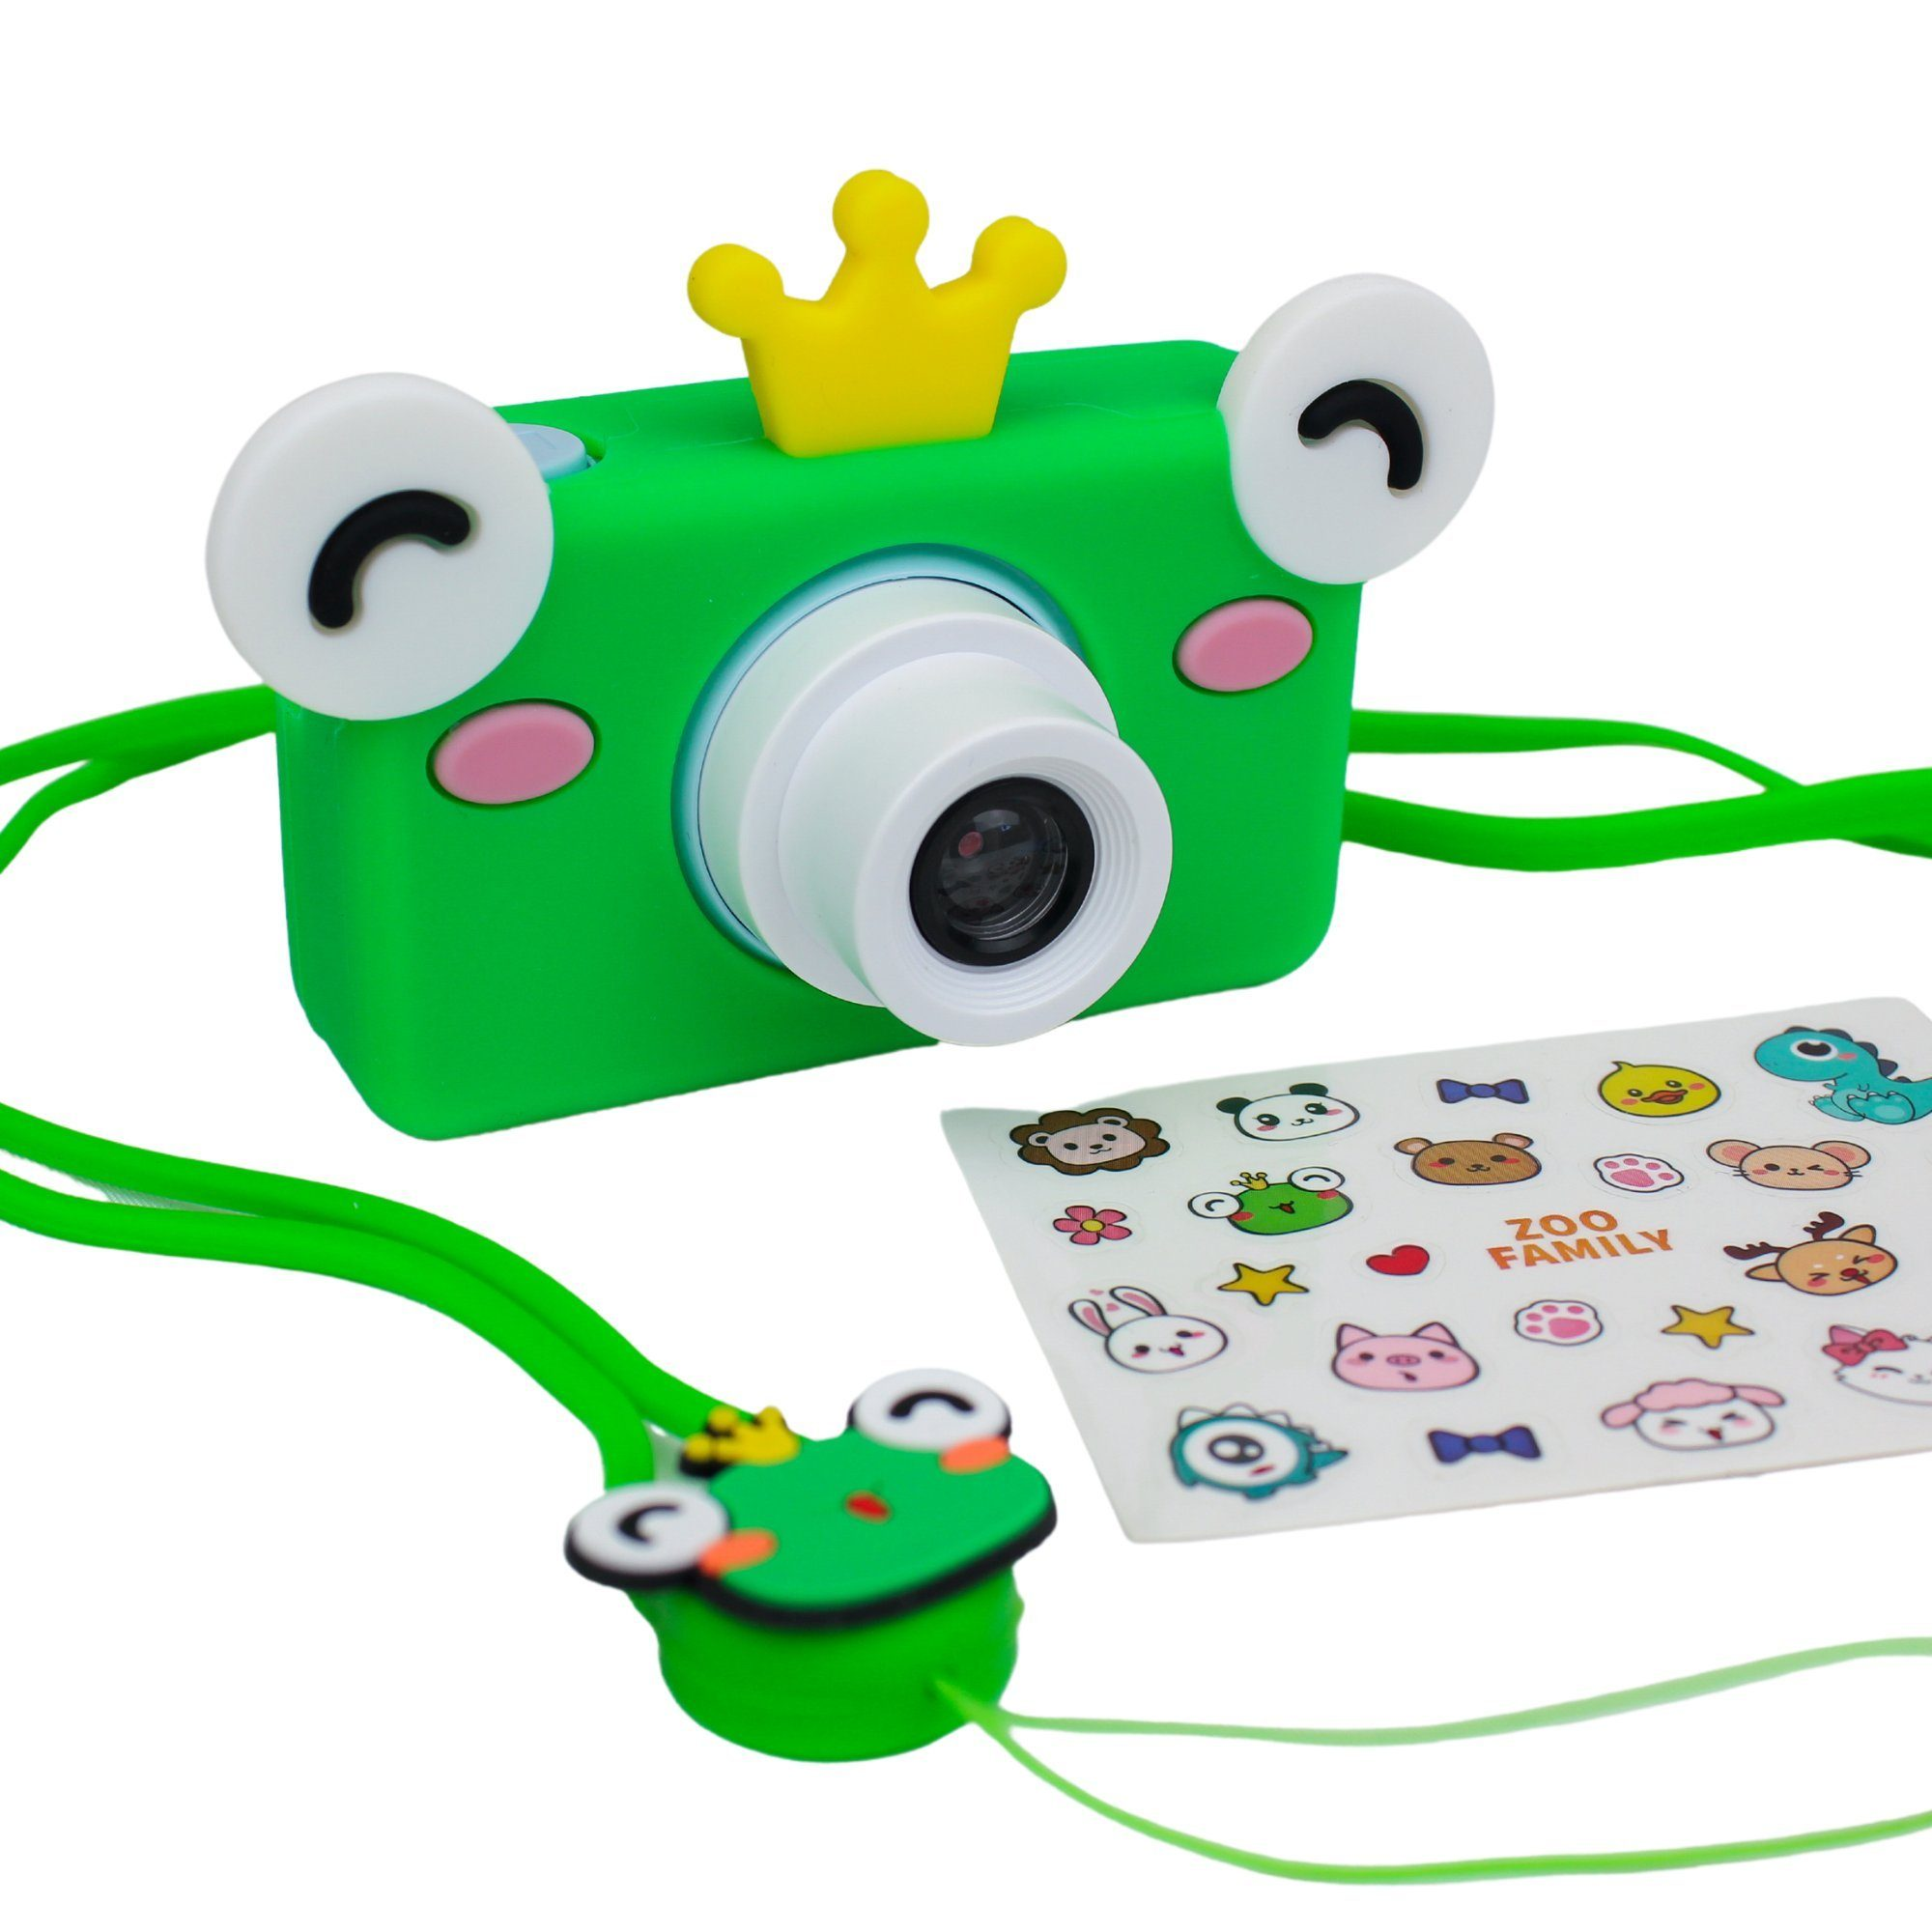 Kinder-Digitalkamera DOTMALL Grün- 32MP C1 KK Froschkönig